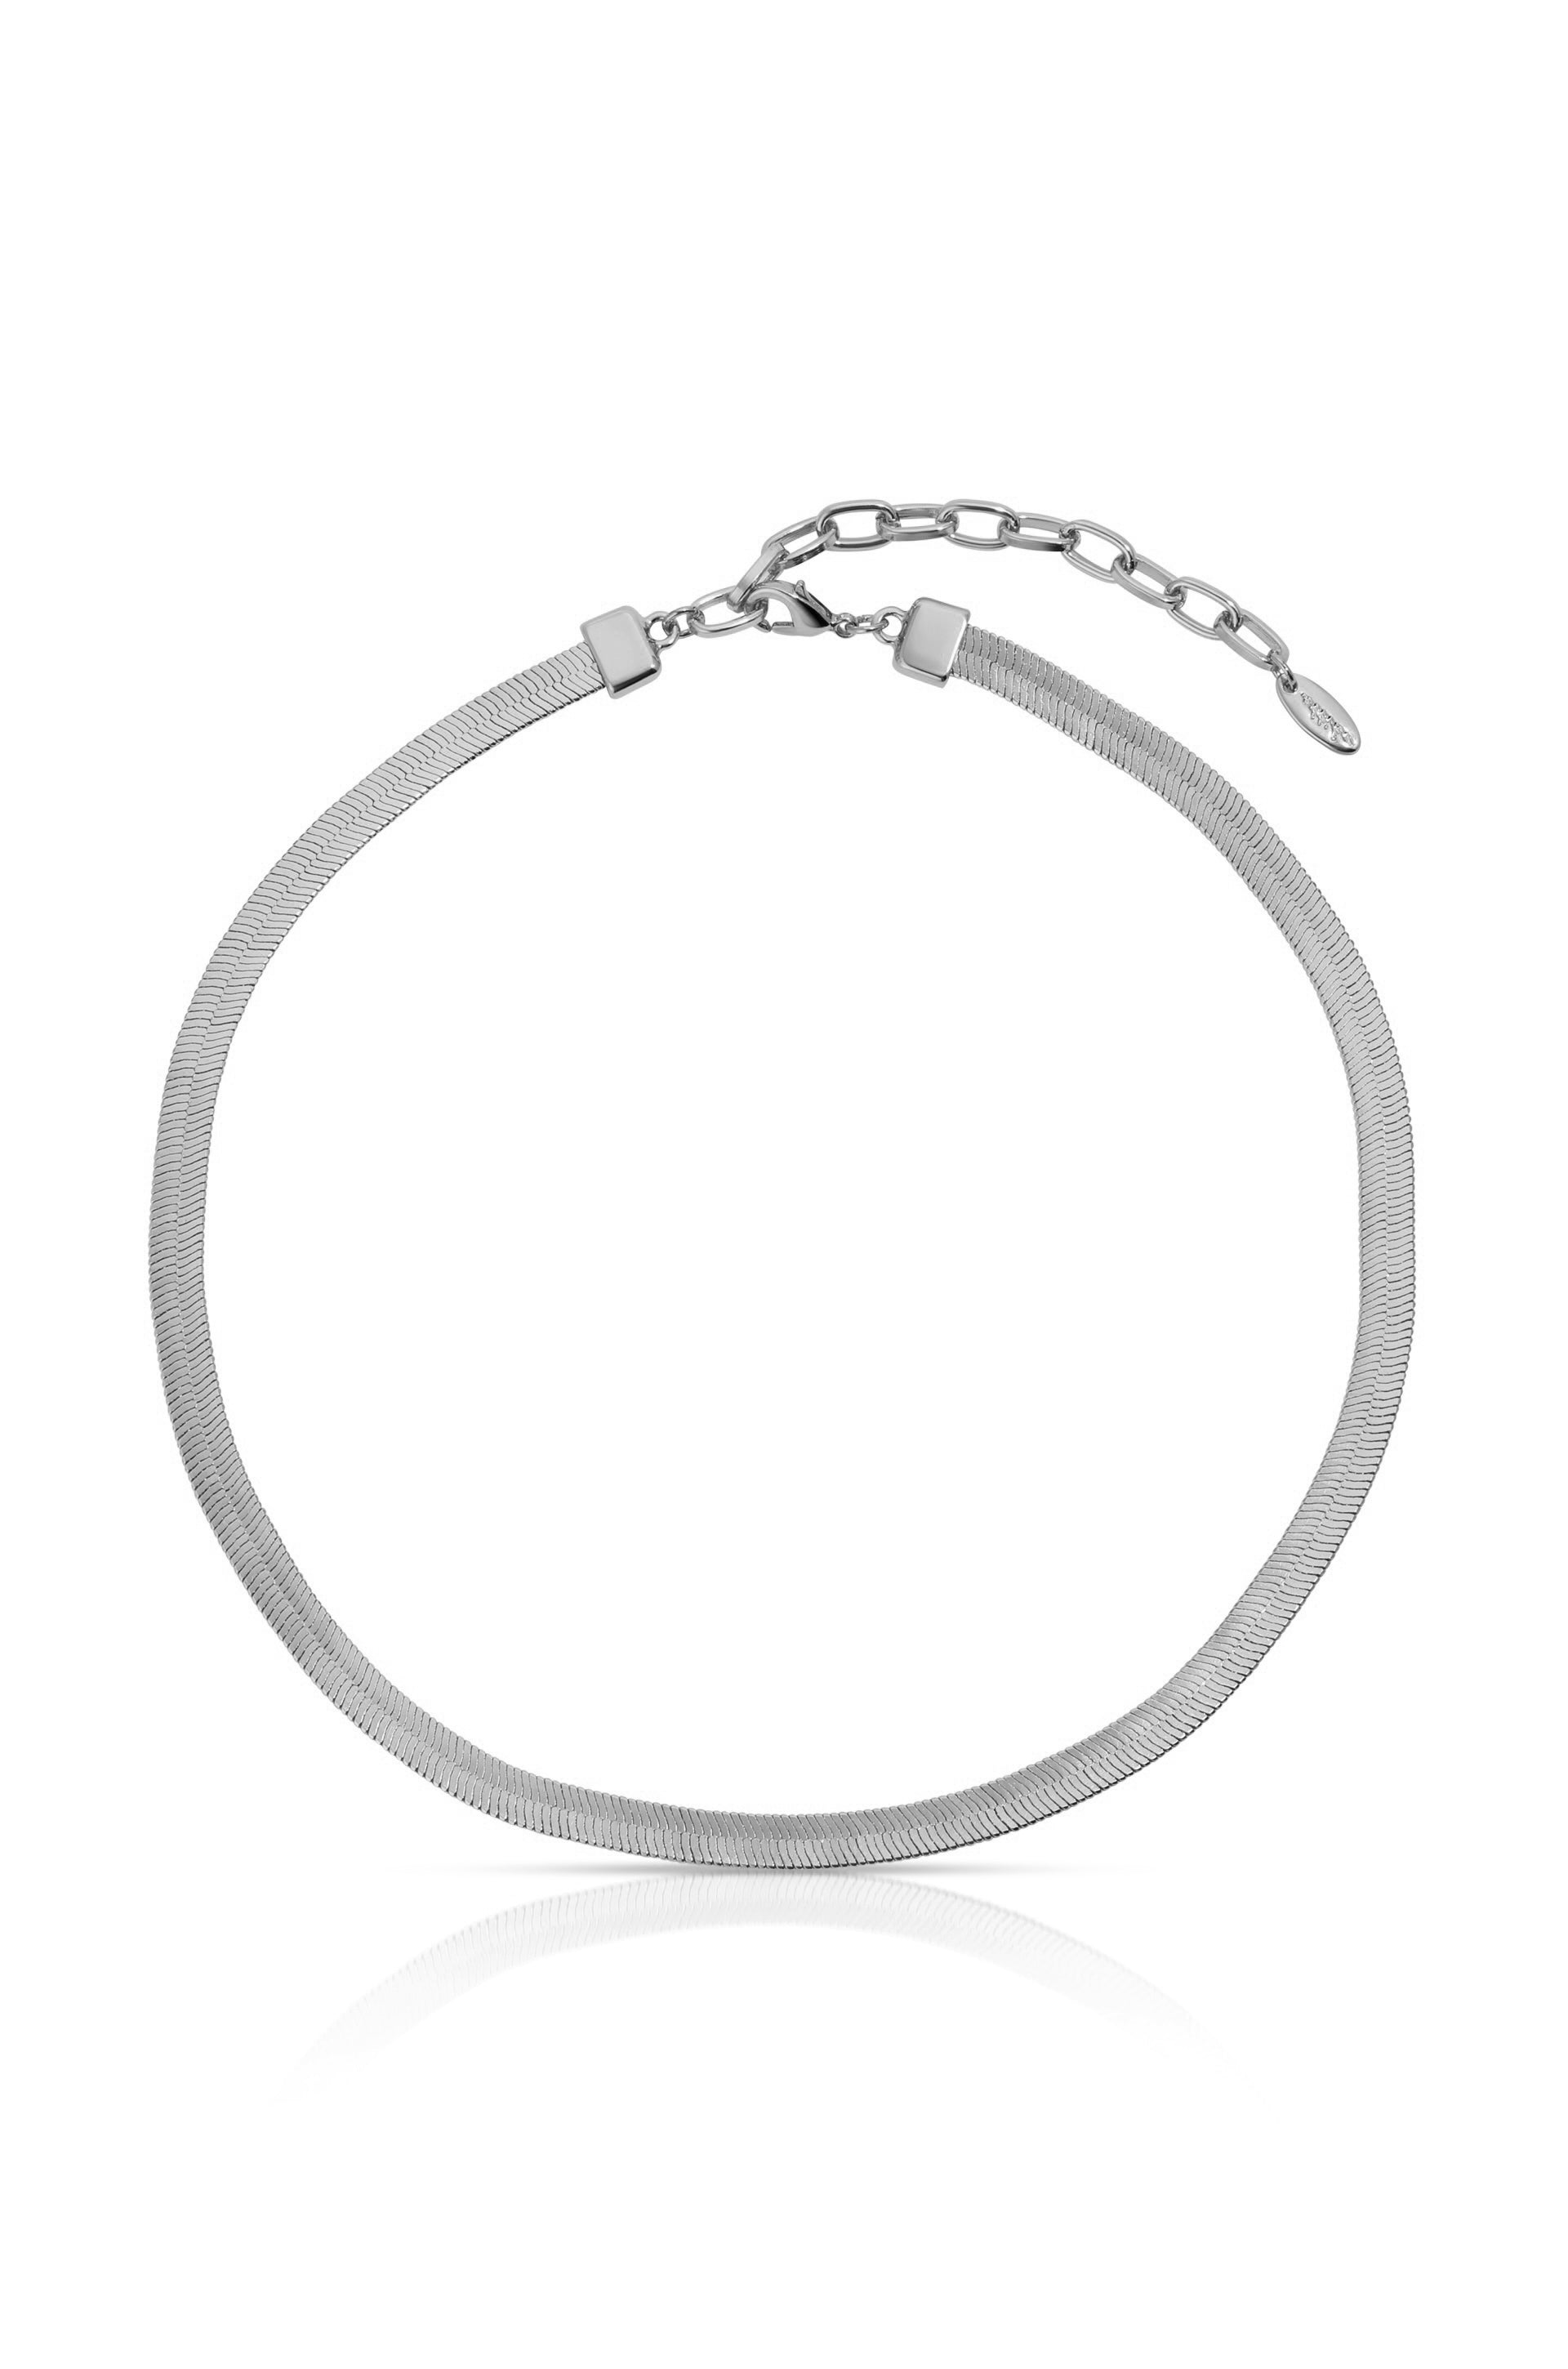 Brooklyn Flat Herringbone Chain Necklace in rhodium